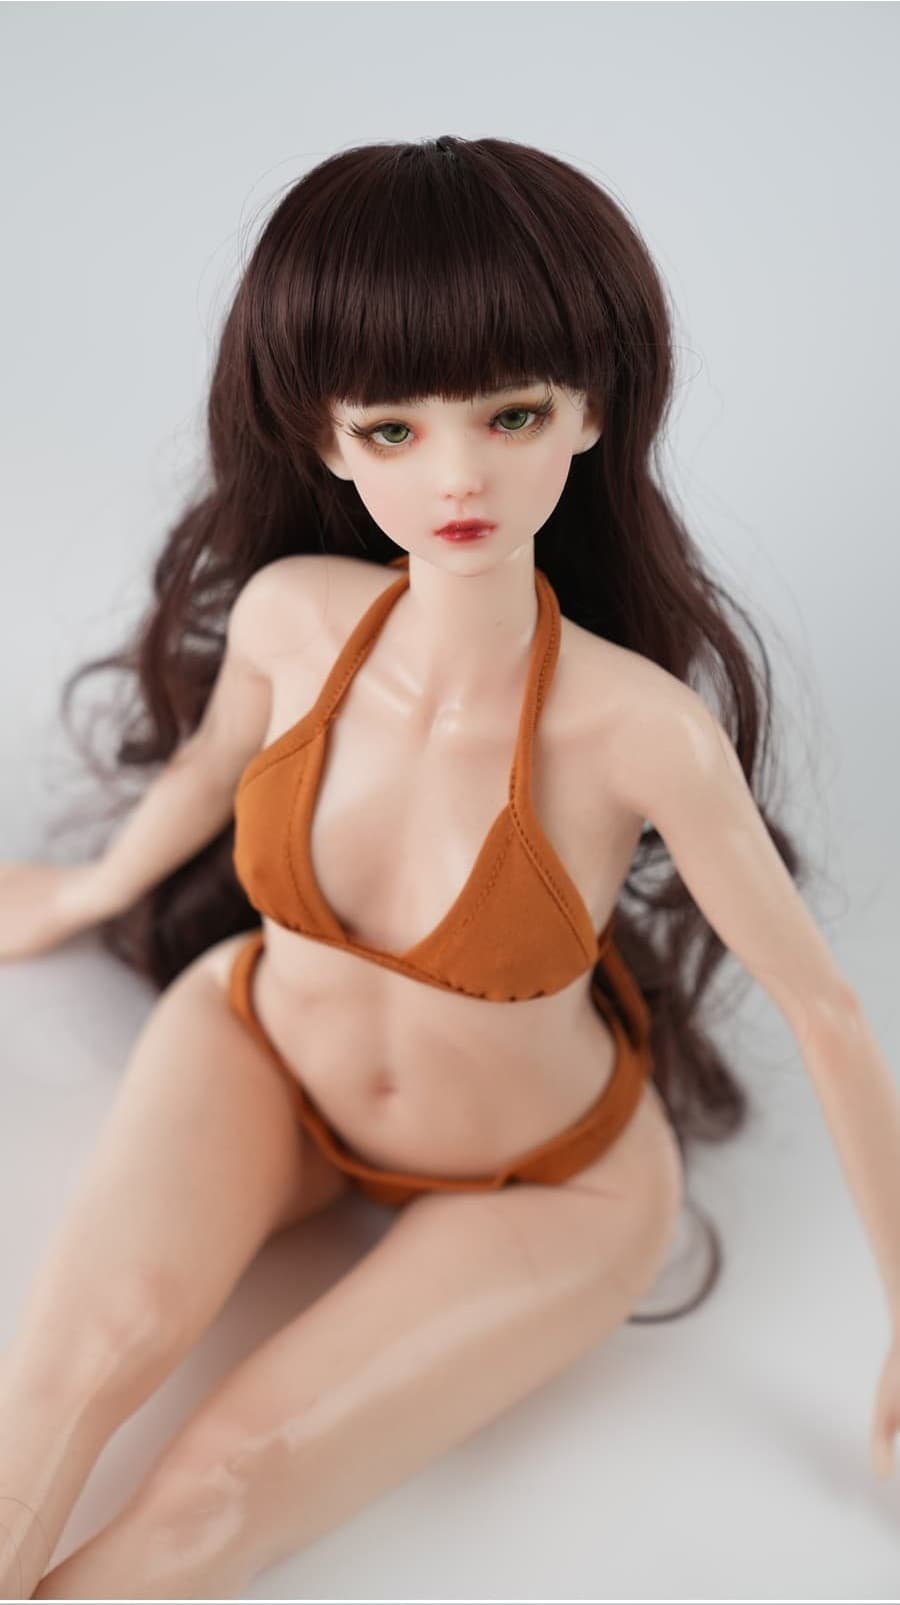 【Doll-Forever】Navia 60cm (全矽膠)